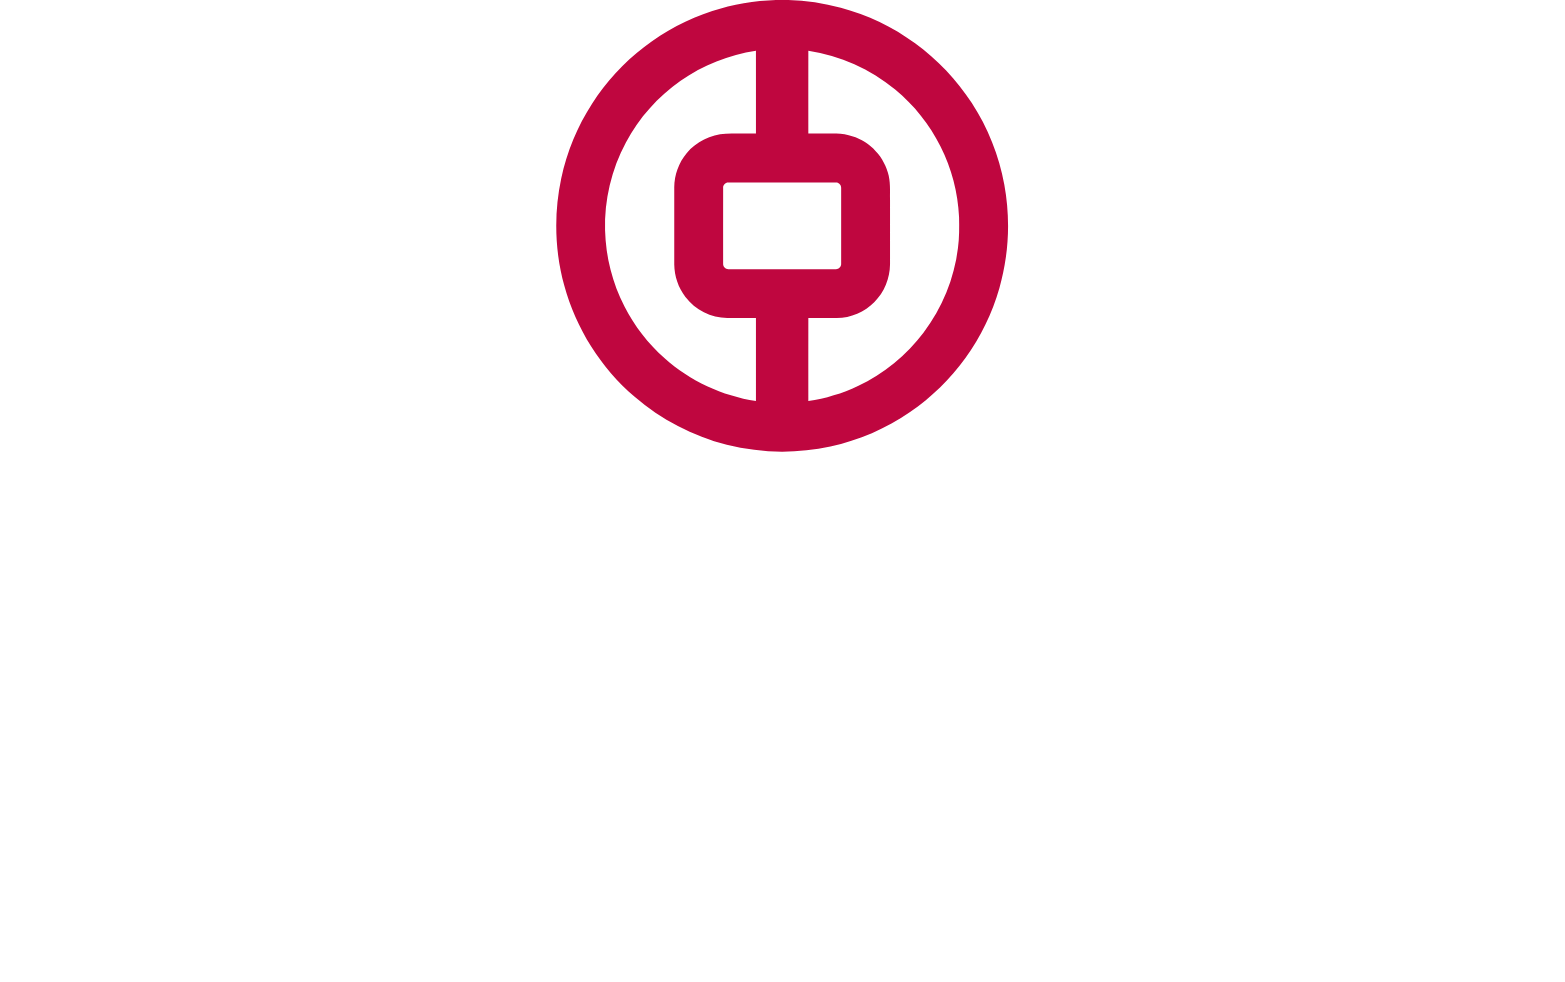 Bank of China (Hong Kong) logo large for dark backgrounds (transparent PNG)